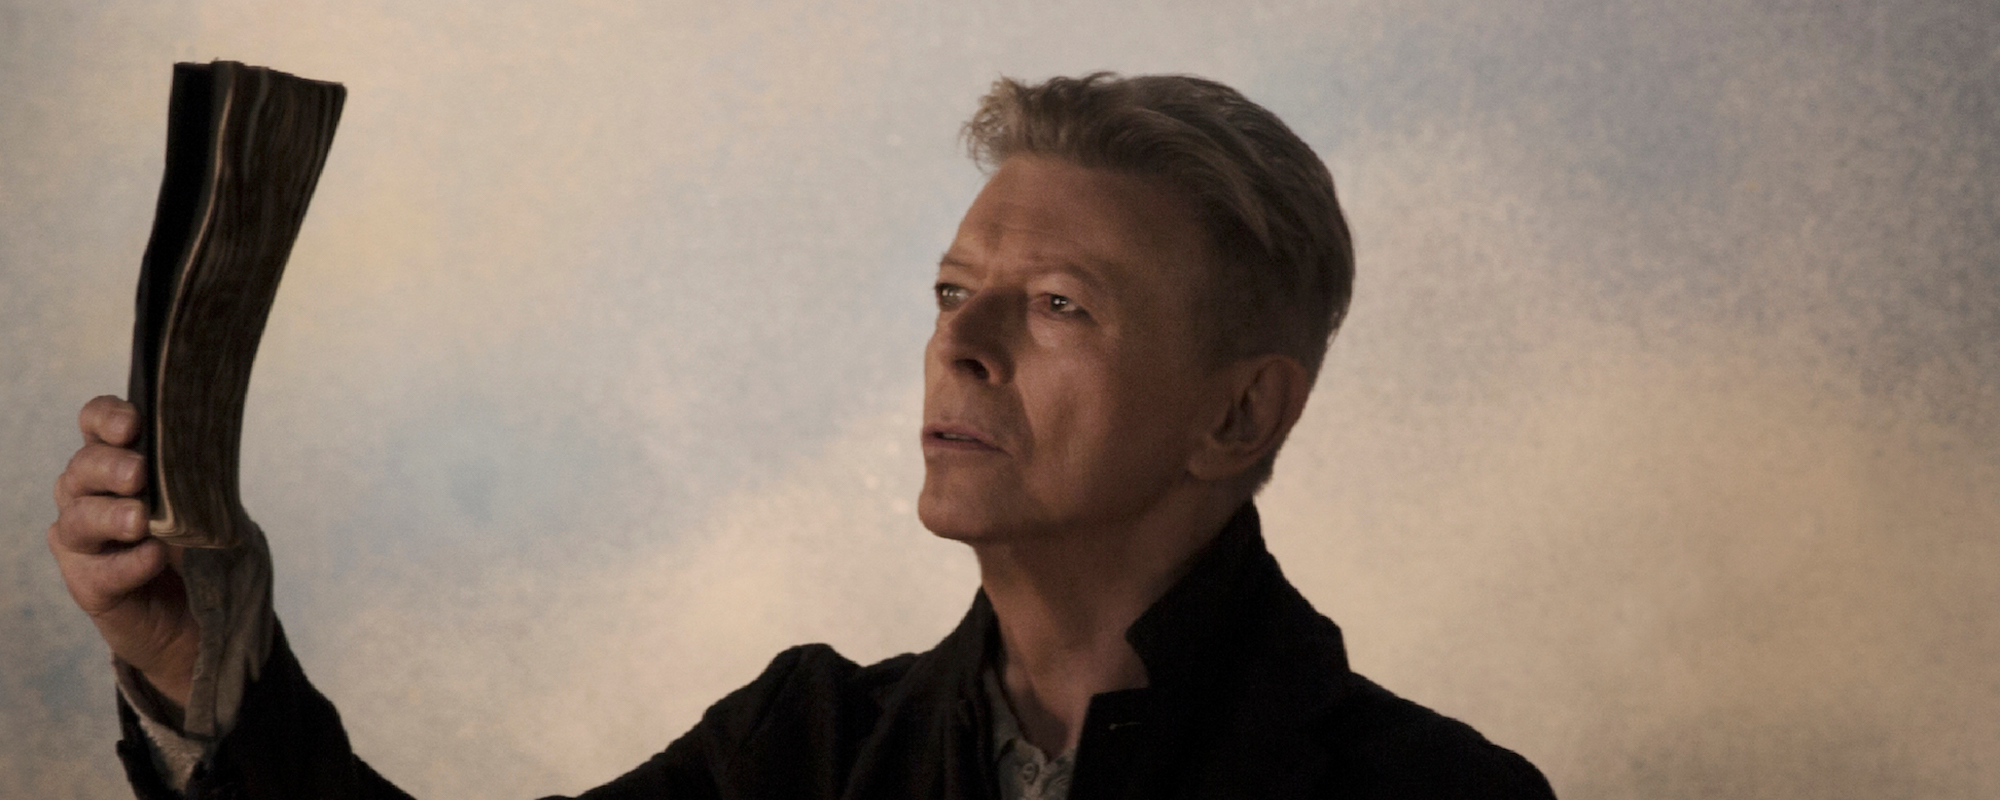 David Bowie Estate Announces Reissue of Five Bowie Albums, Livestream Today